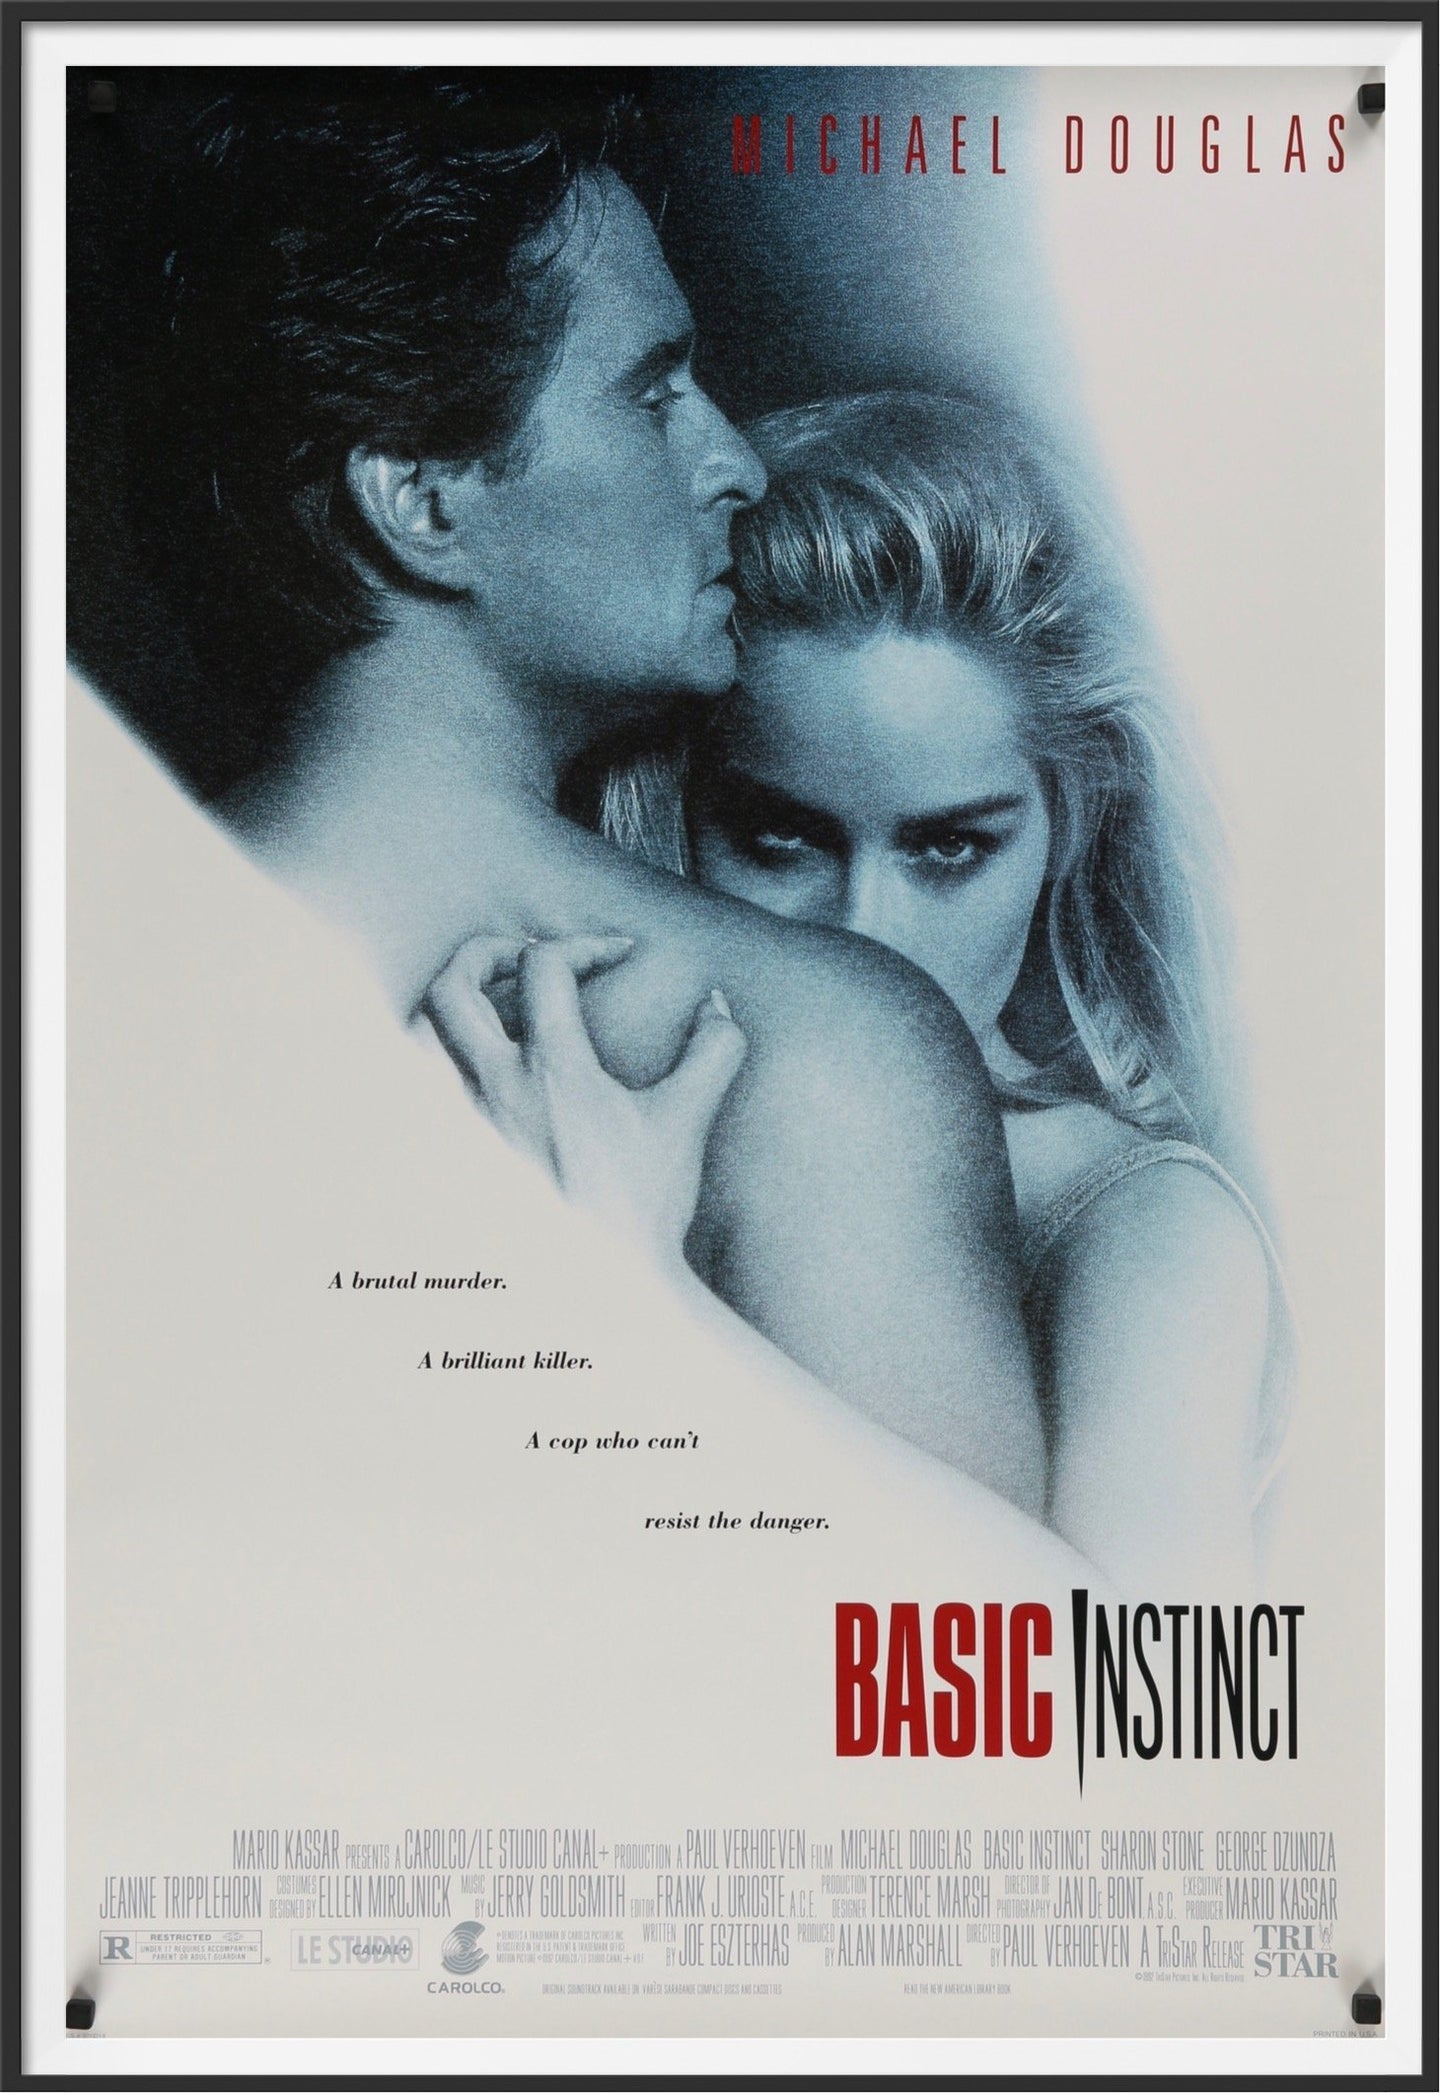 An original movie poster for the film Basic Instinct